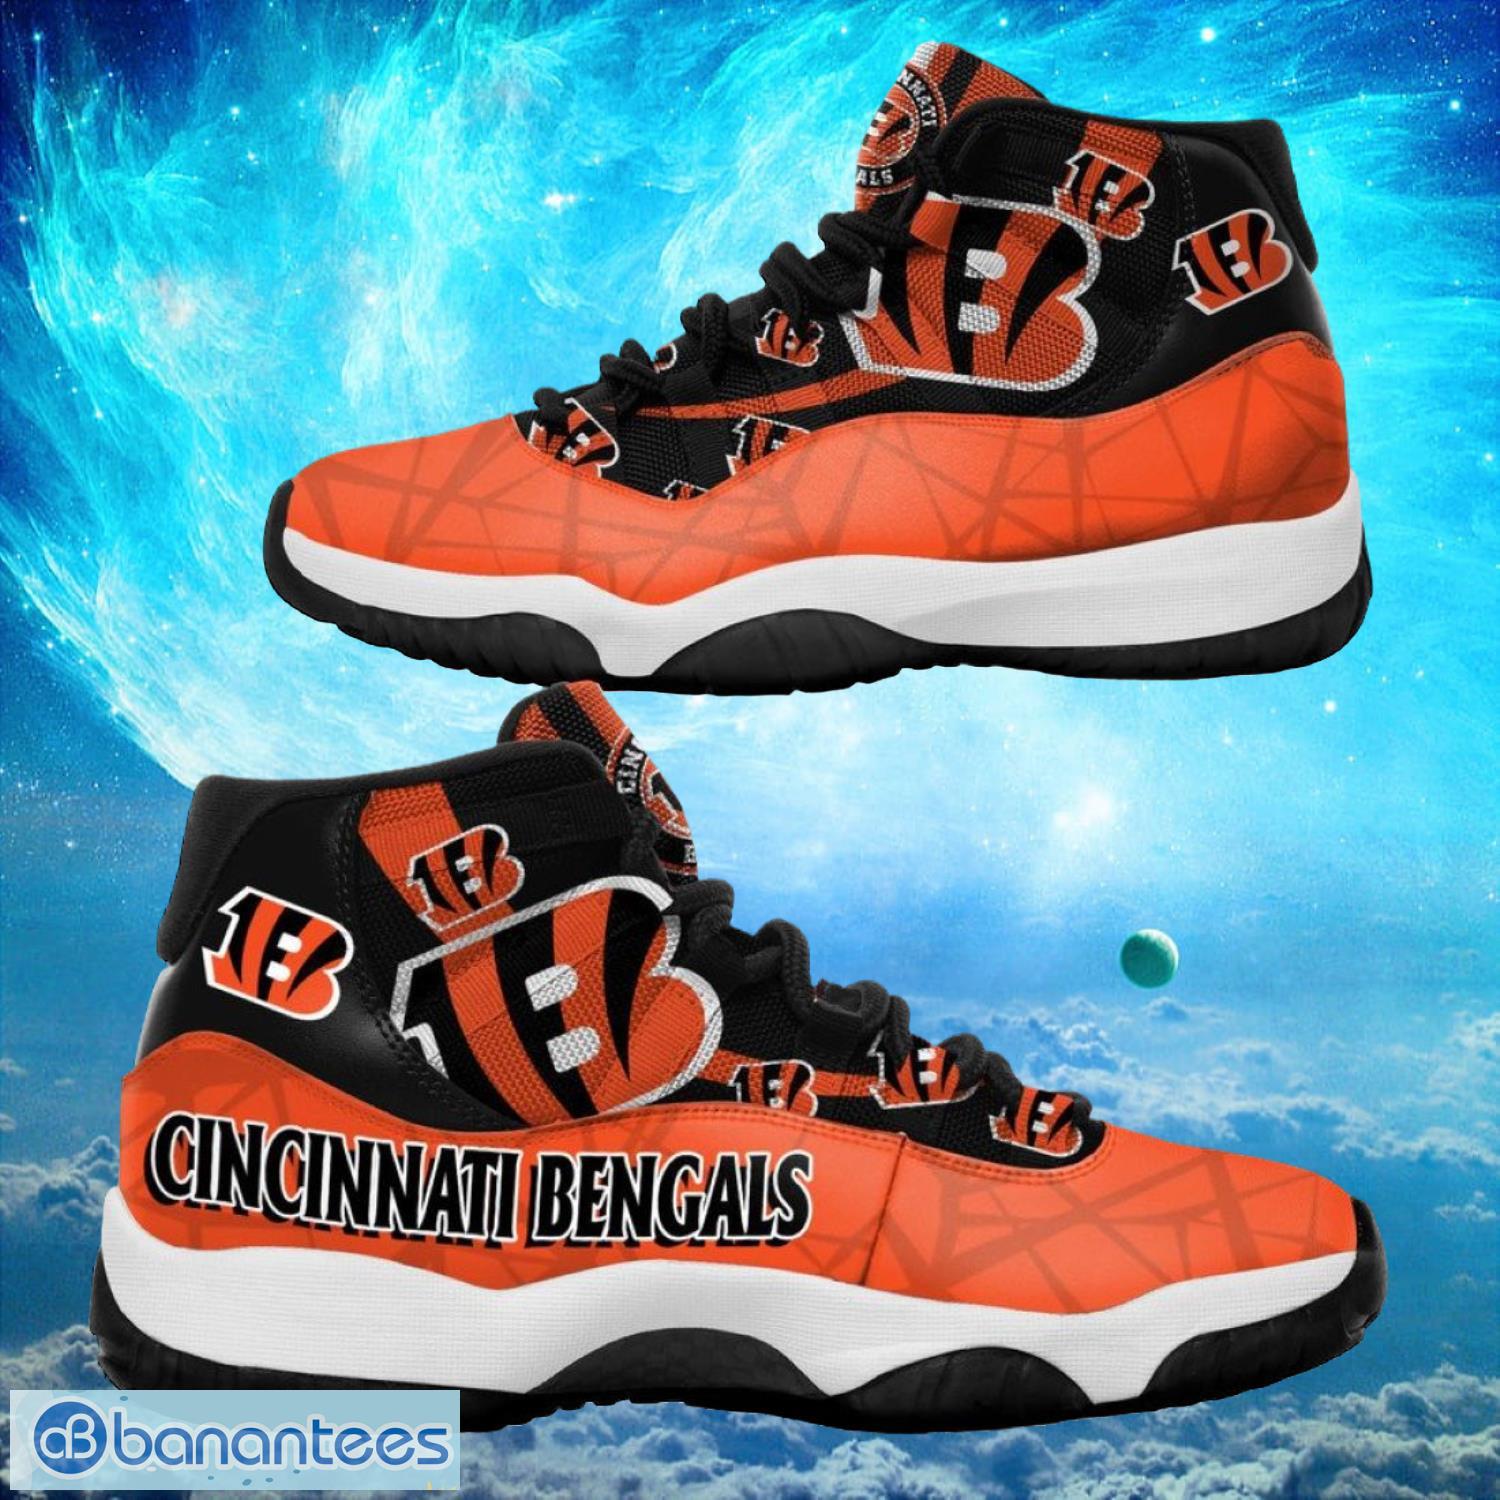 Cincinnati Bengals NFL Air Jordan 11 Sneakers Shoes Gift For Fans Product Photo 1